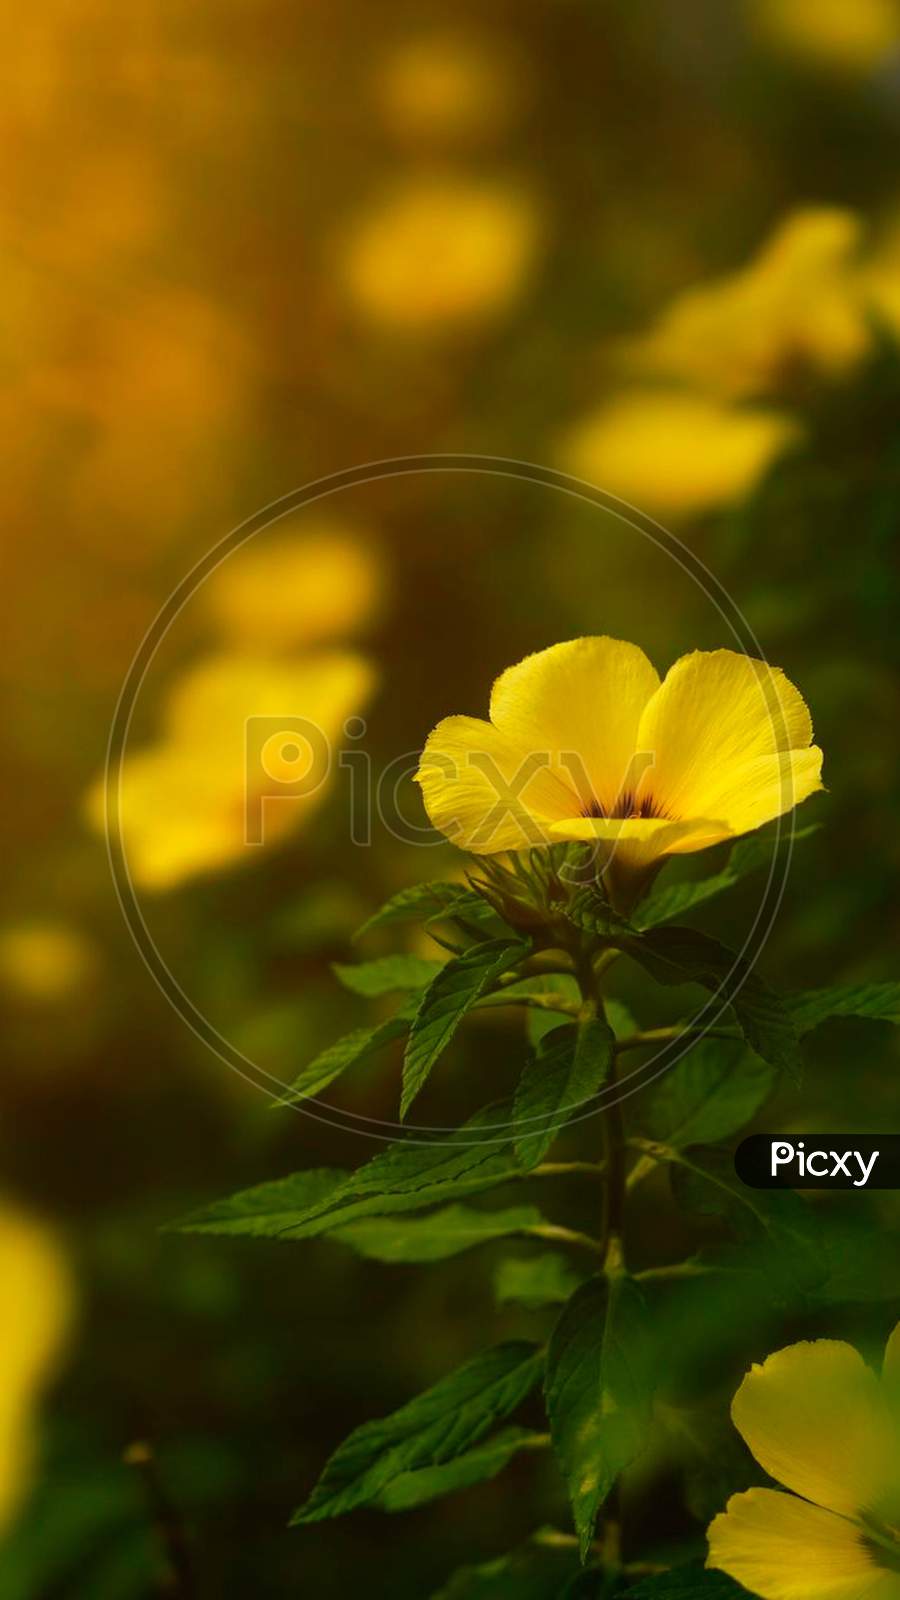 Yellow poppy closeup wildflower macro photography with blur background